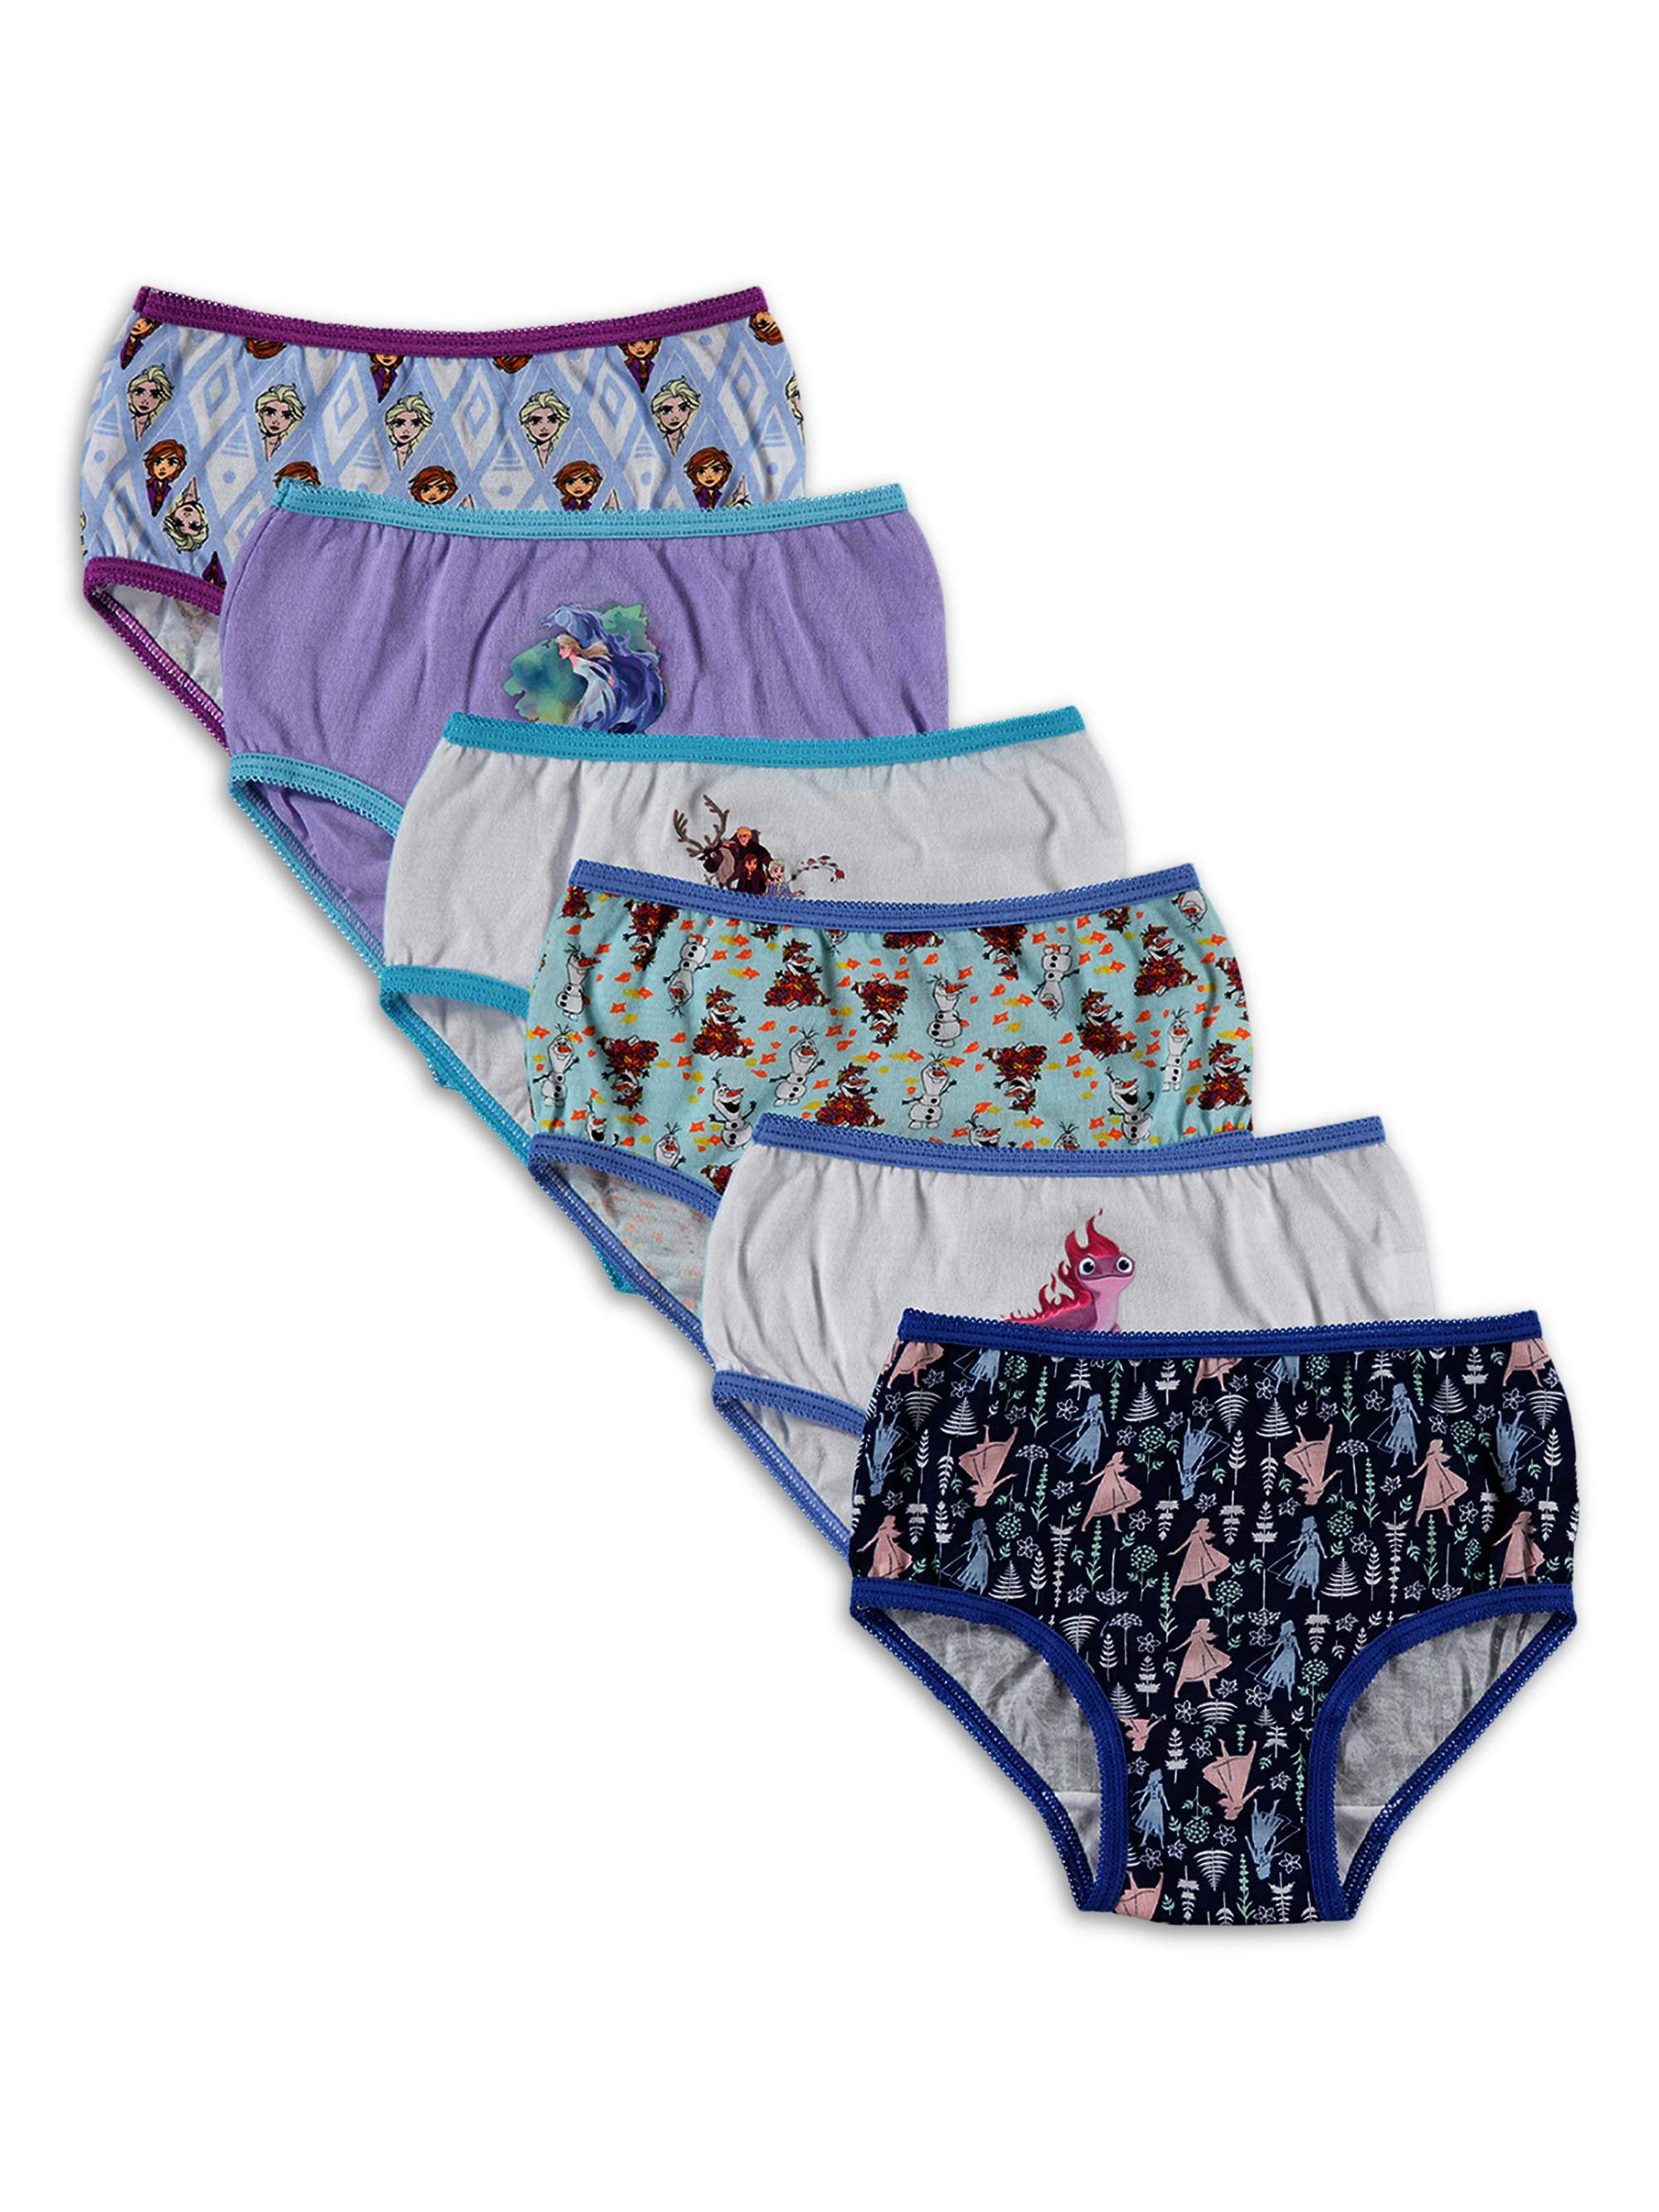 Core Pretty Kids Series Comfy Cotton Baby Underwear Little Girls Assorted Briefs Princess Panties Pack of 4